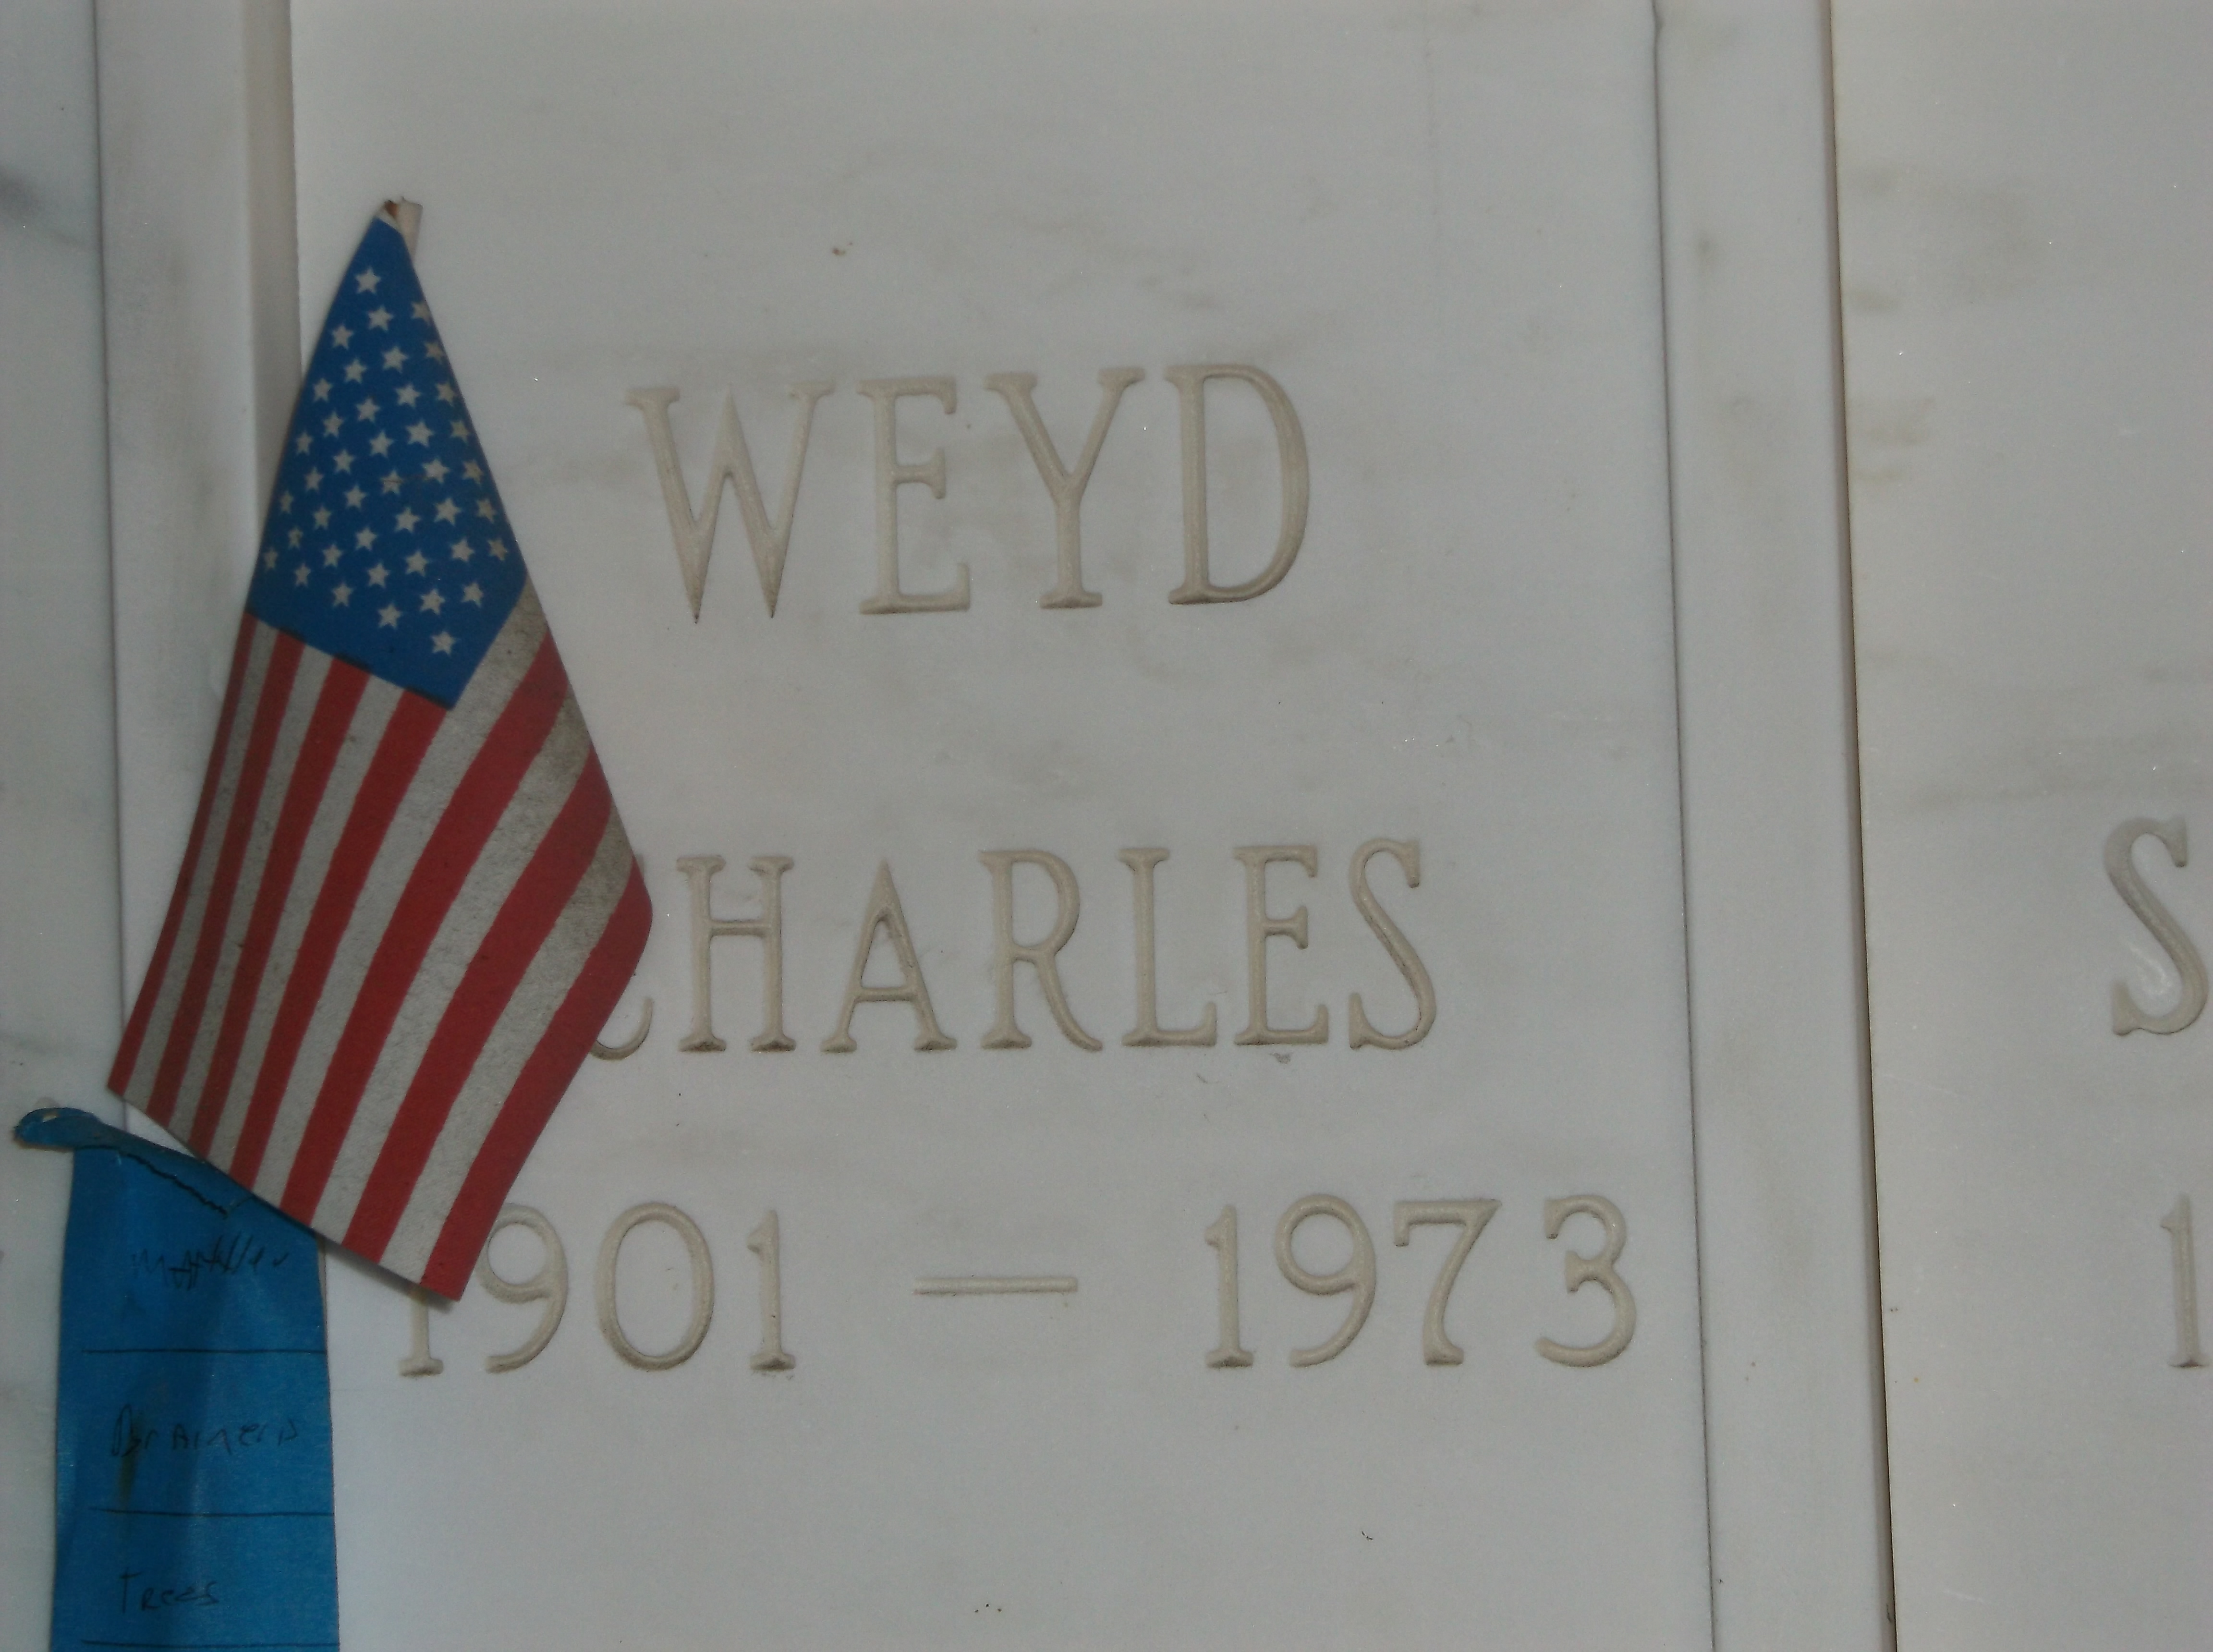 Charles Weyd